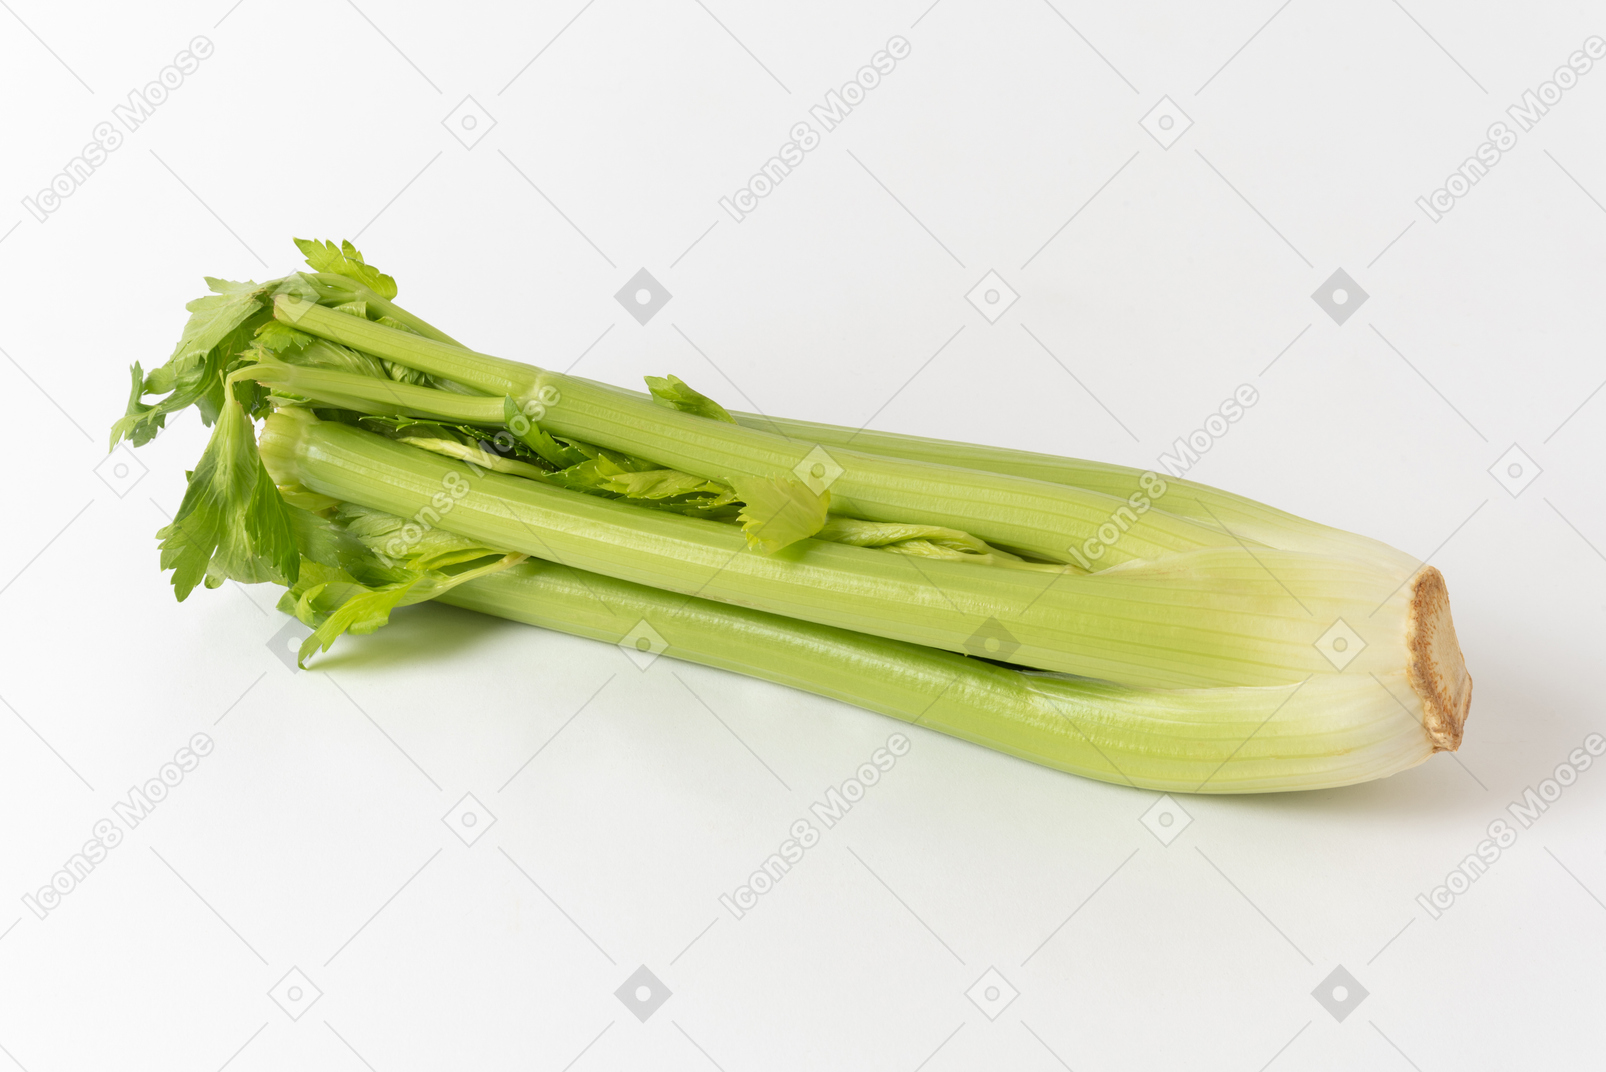 Celery is rich in vitamin k